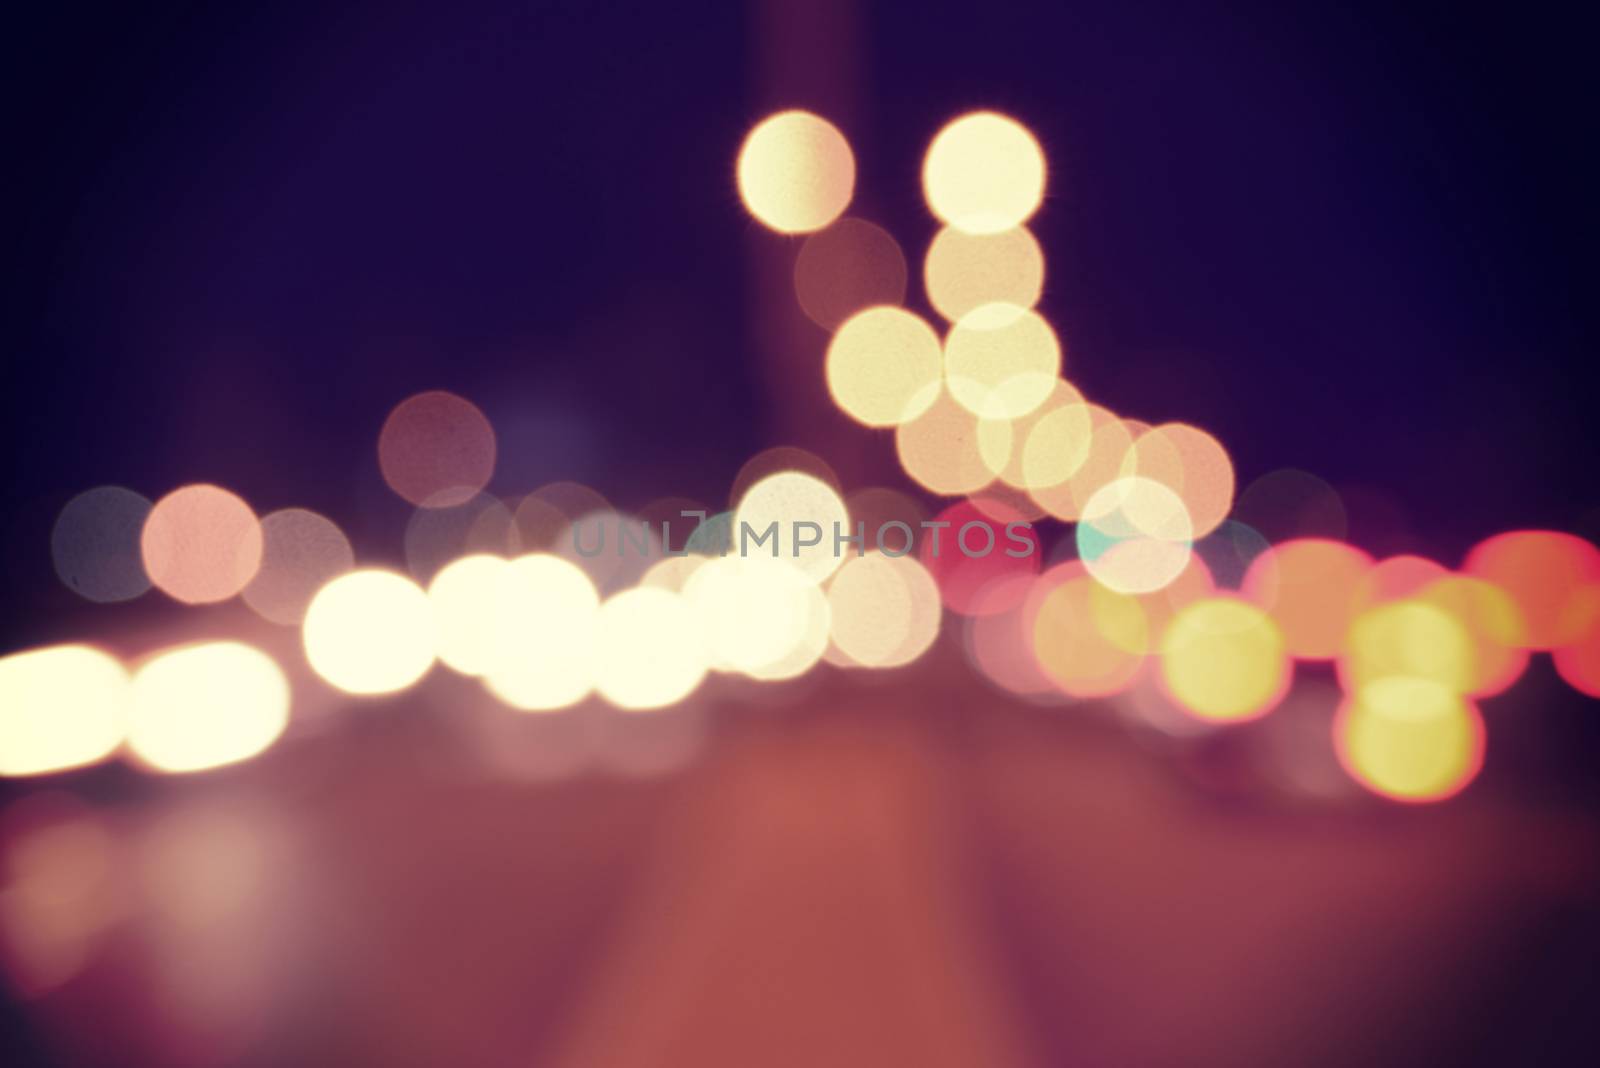  Blur urban car lights bokeh background with vintage filter effect.